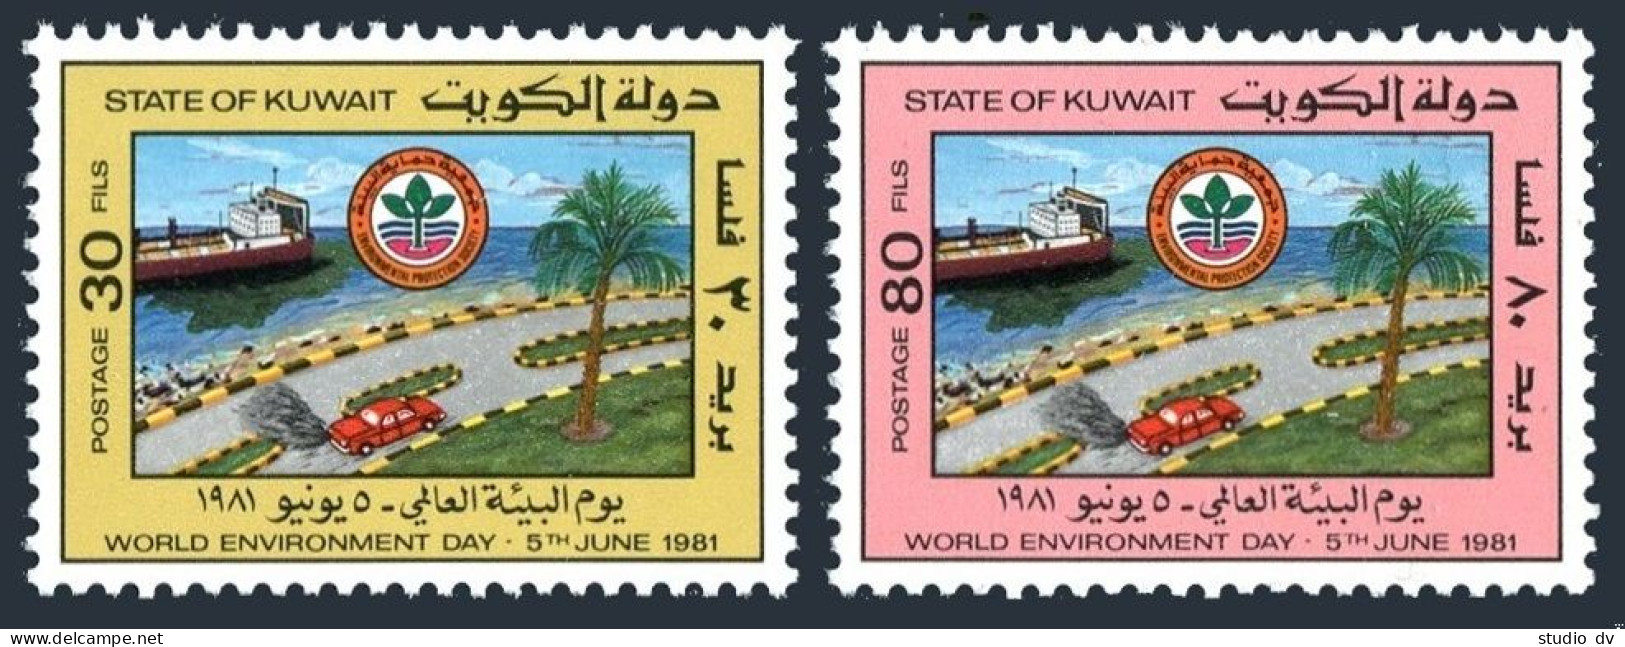 Kuwait 851-852, MNH. Mi 893-894. World Environment Day, 1981. Automobile, Ship. - Koweït